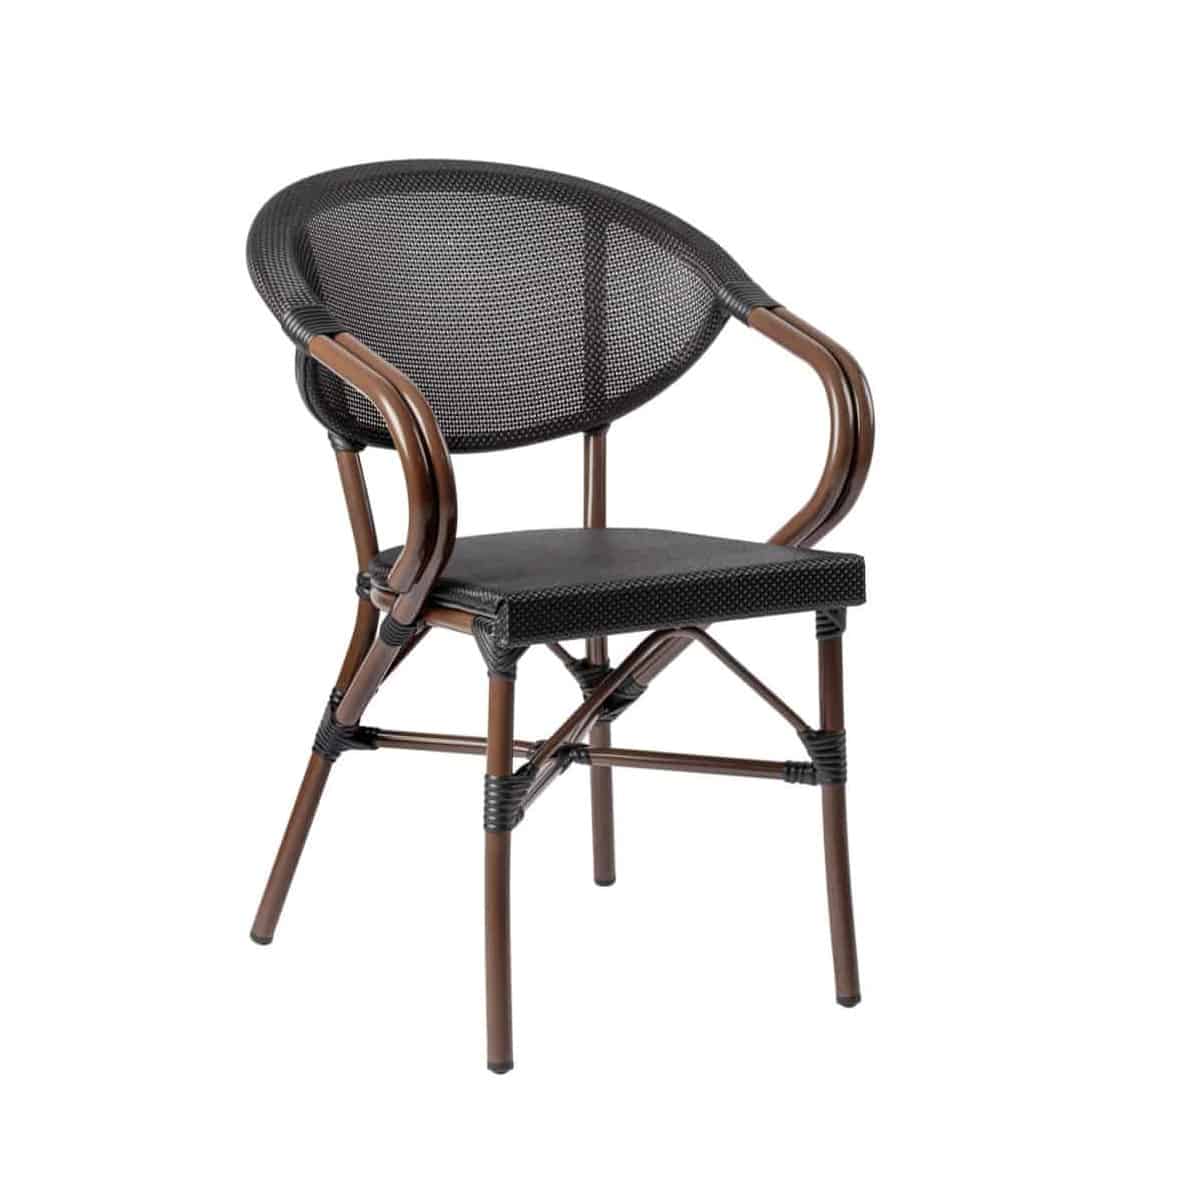 Textileen horeca ( terras ) stoelen curved bruin - Super